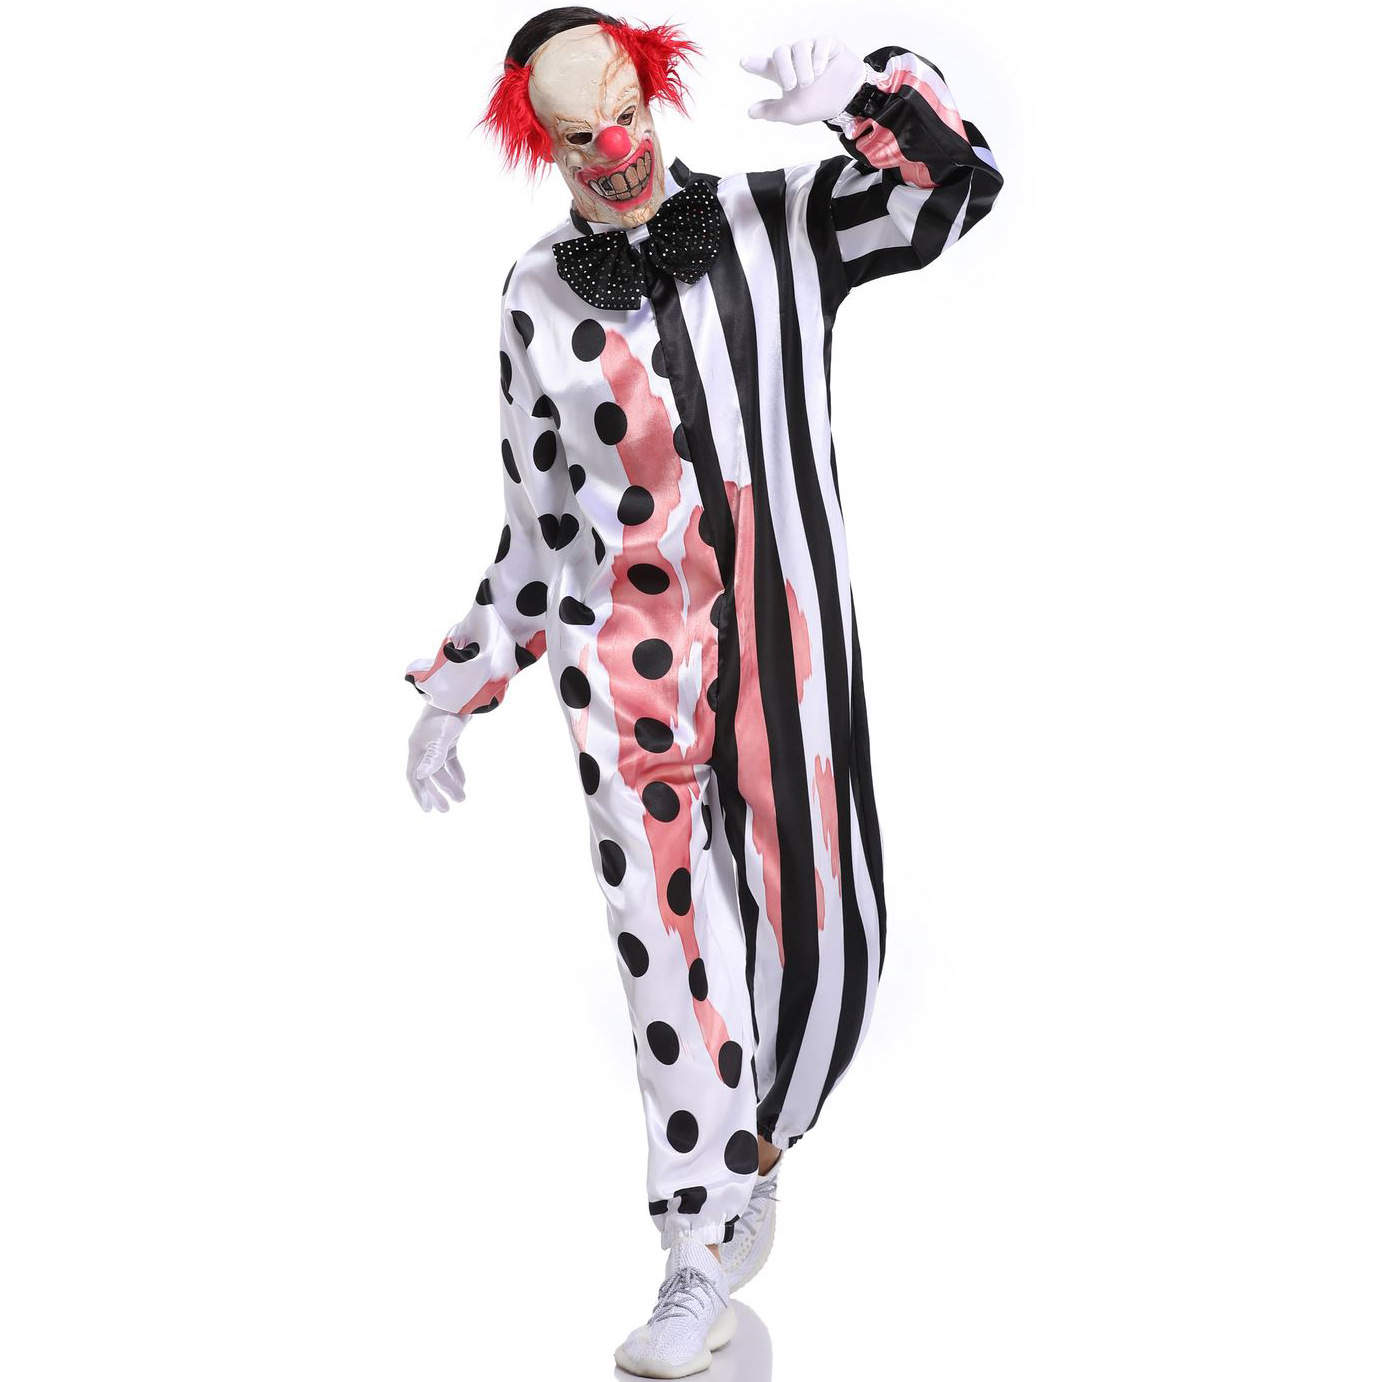 Black White Striped Clown Costume, Clown Outfit Black White